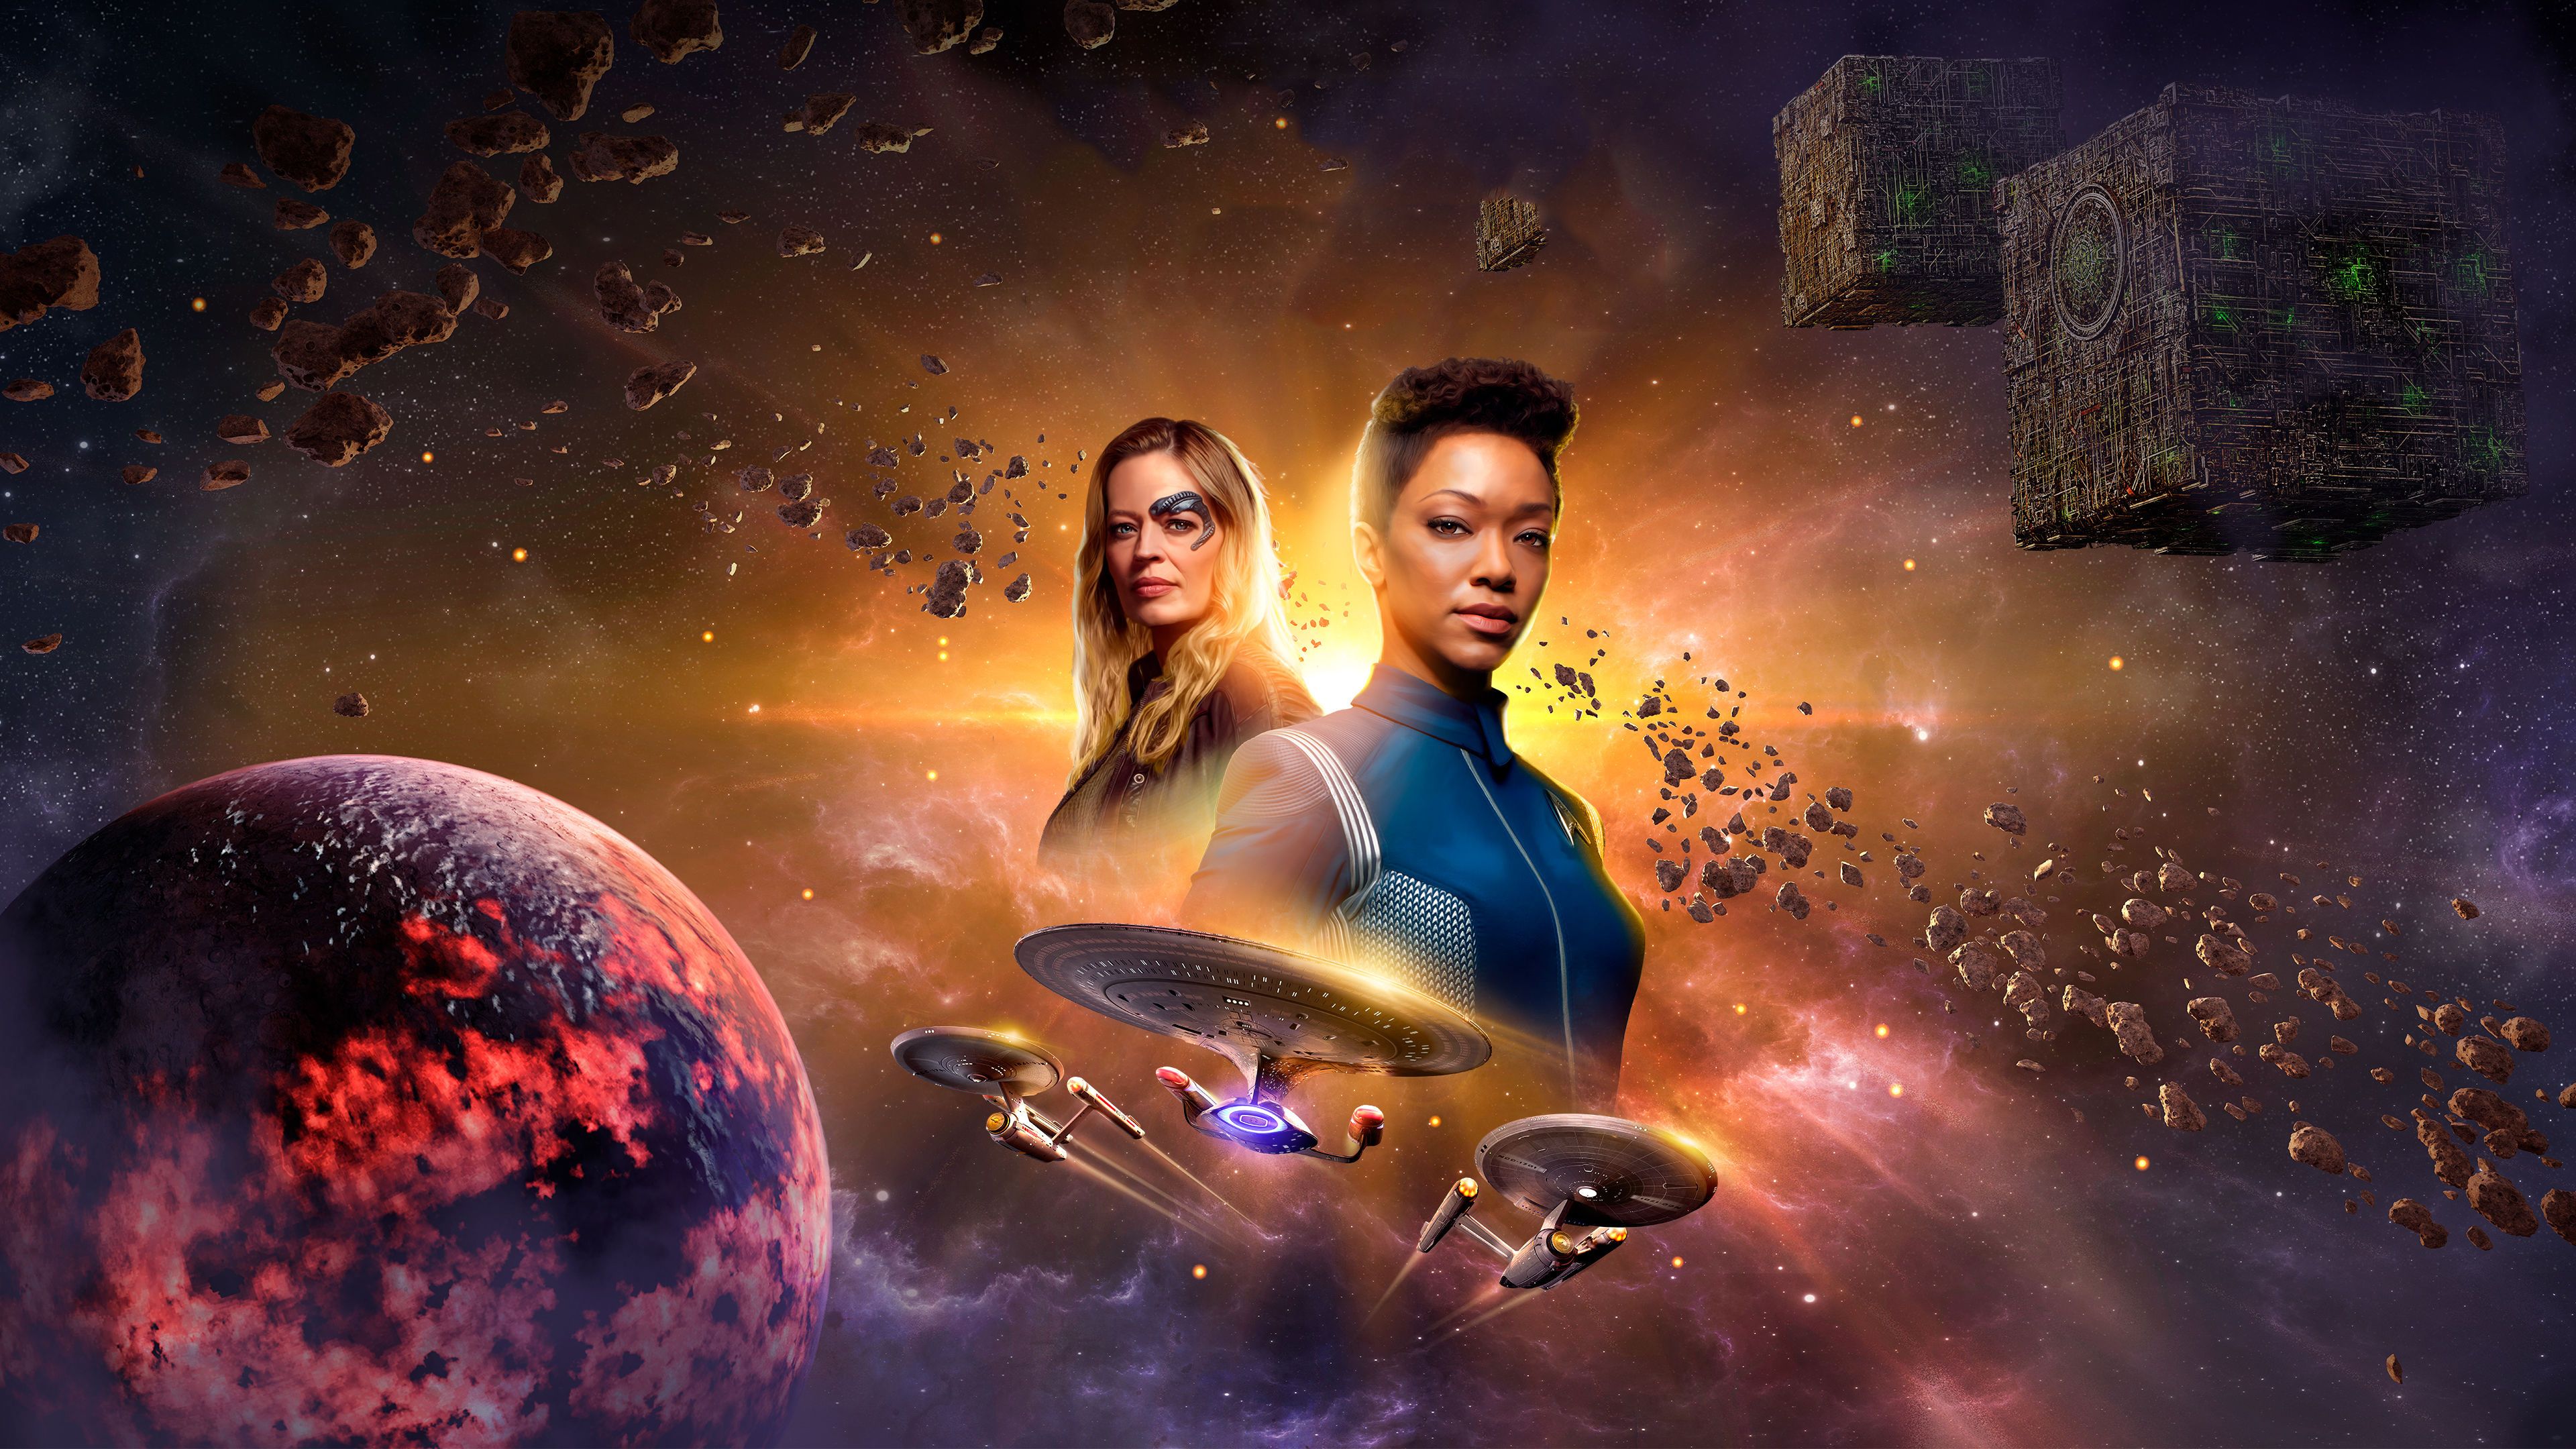 Star Trek Online 2020 Game Wallpaper, HD Games 4K Wallpaper, Image, Photo and Background